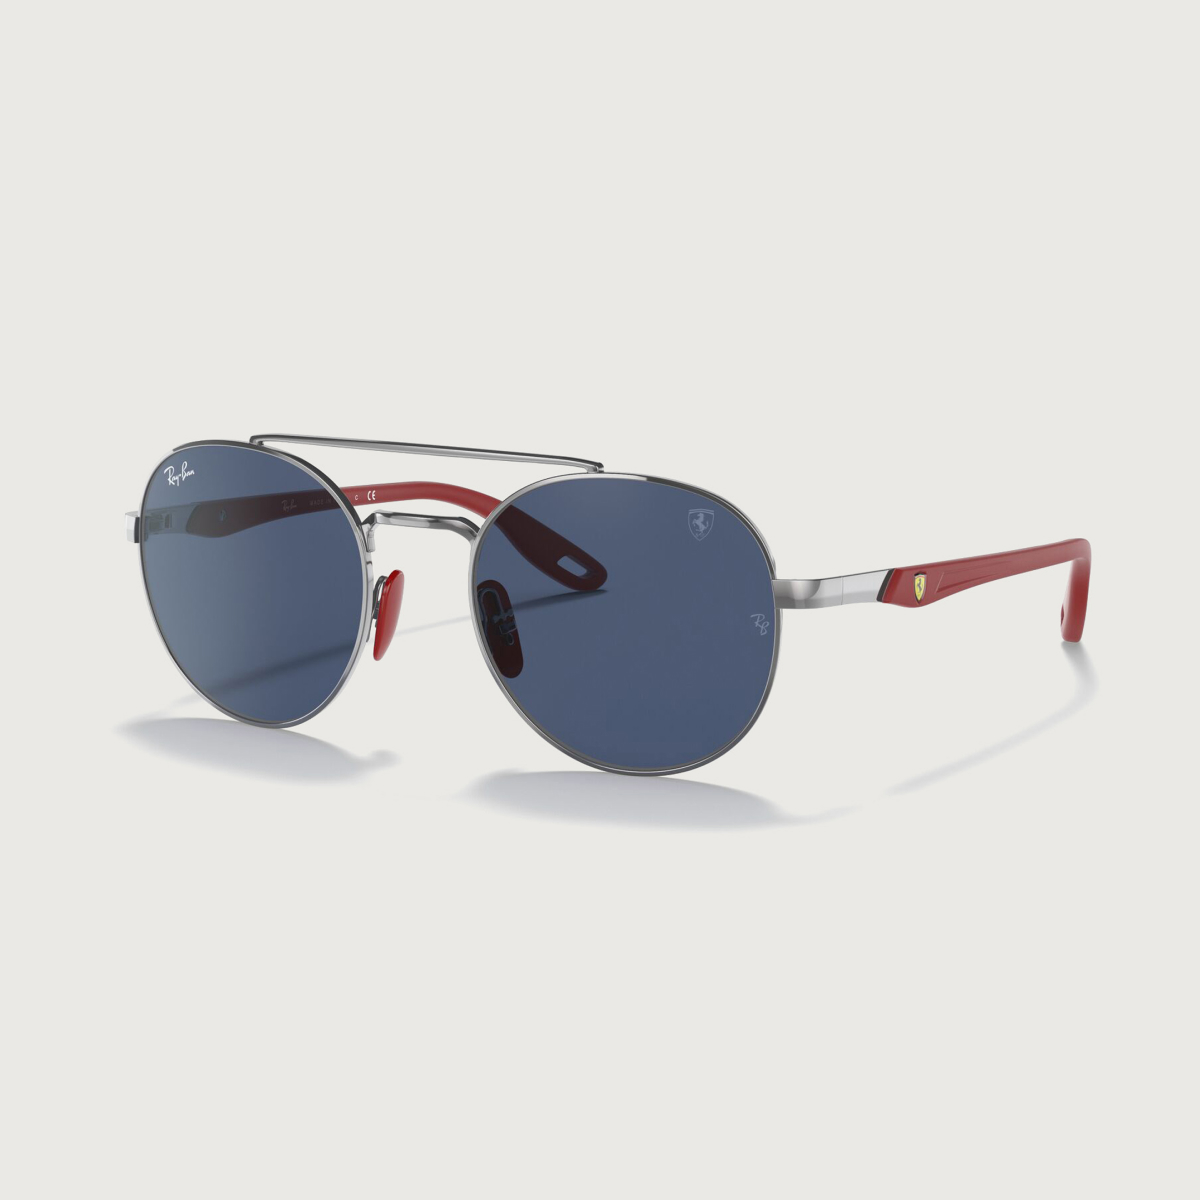 Gunmetal Ray-Ban for Scuderia Ferrari sunglasses with dark blue lenses